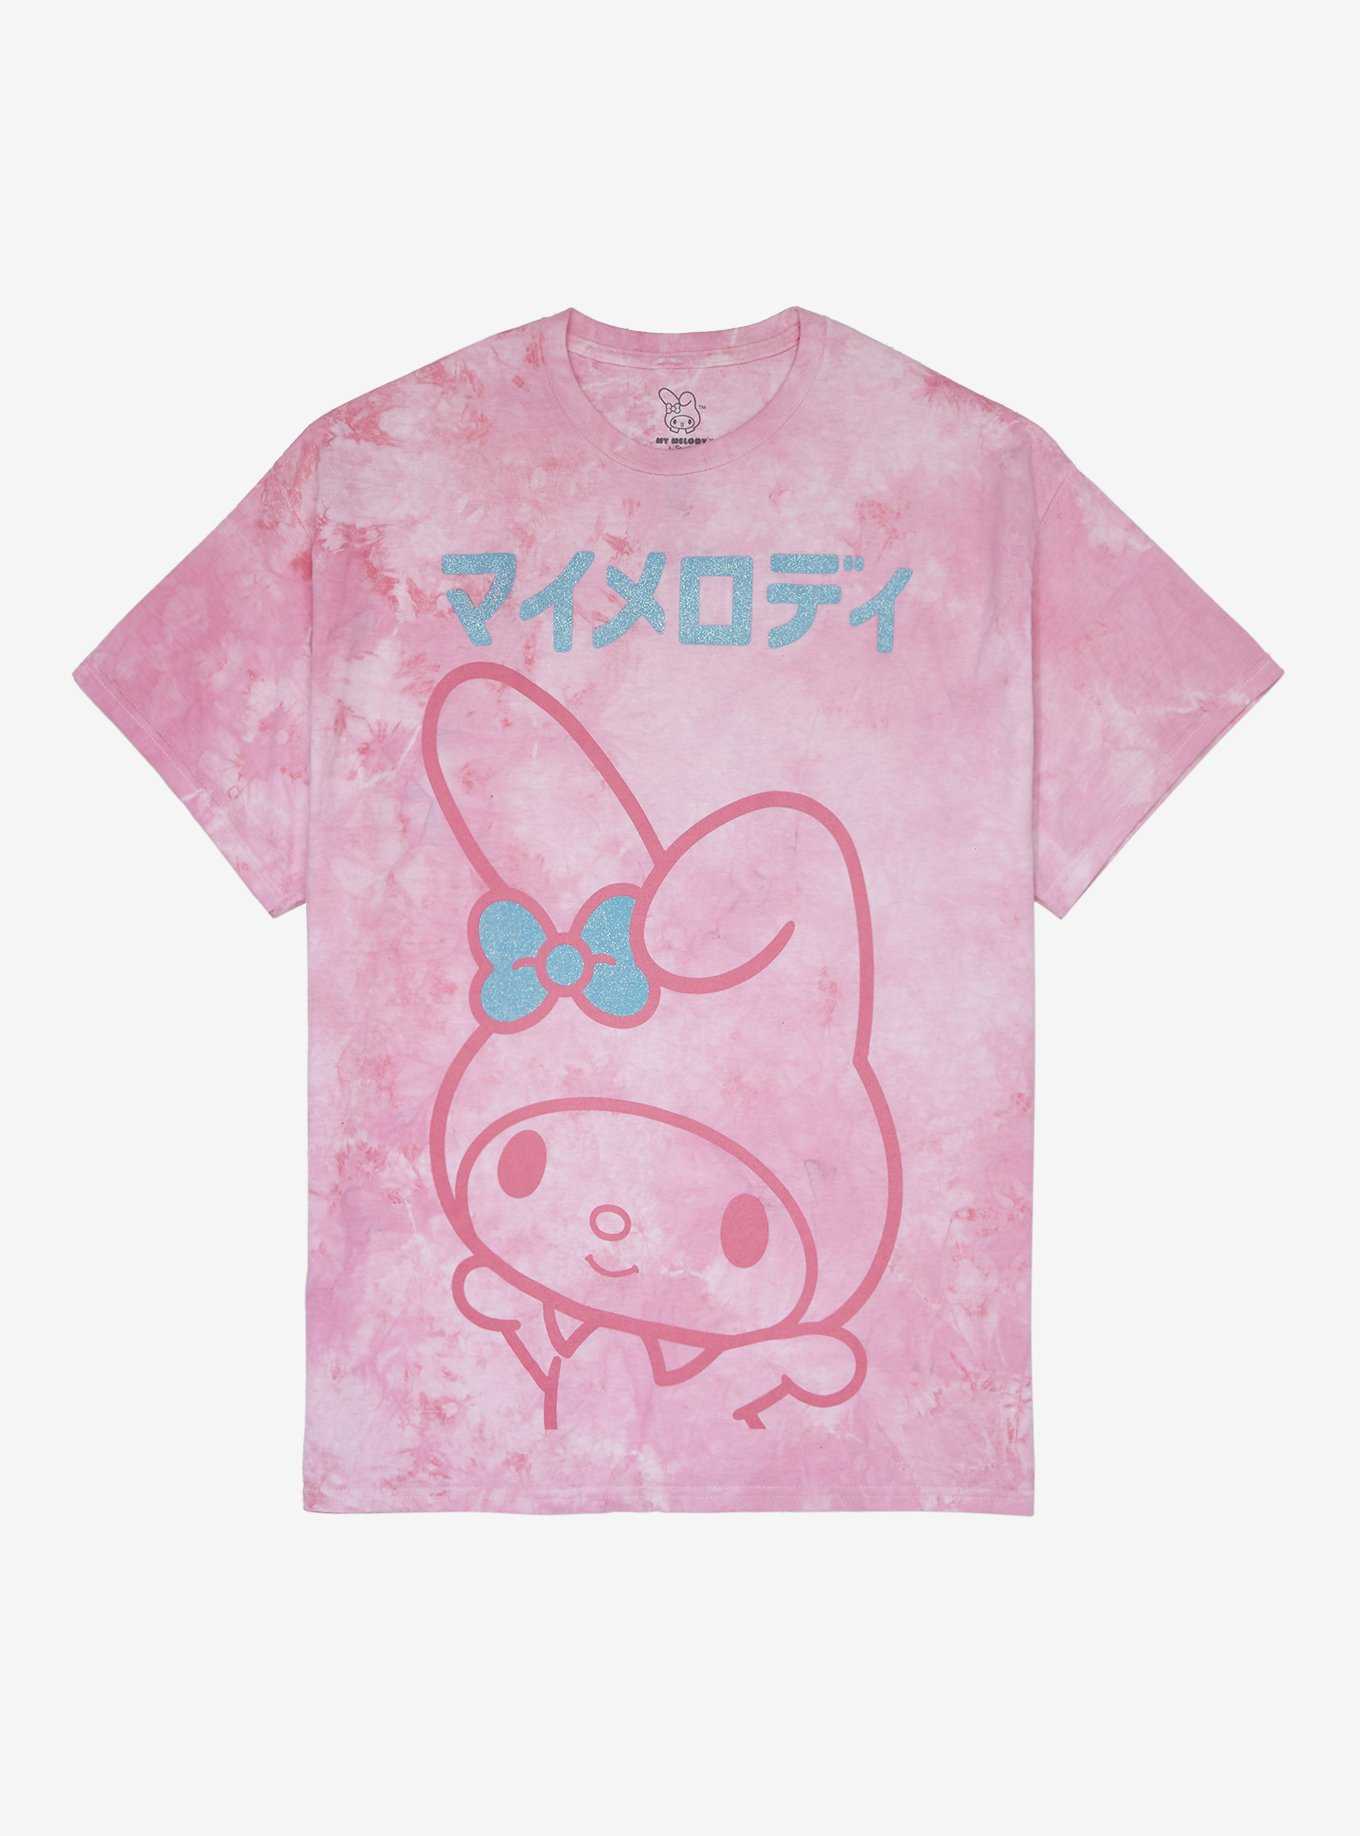 My Melody Jumbo Pink Tie-Dye Boyfriend Fit Girls T-Shirt, , hi-res